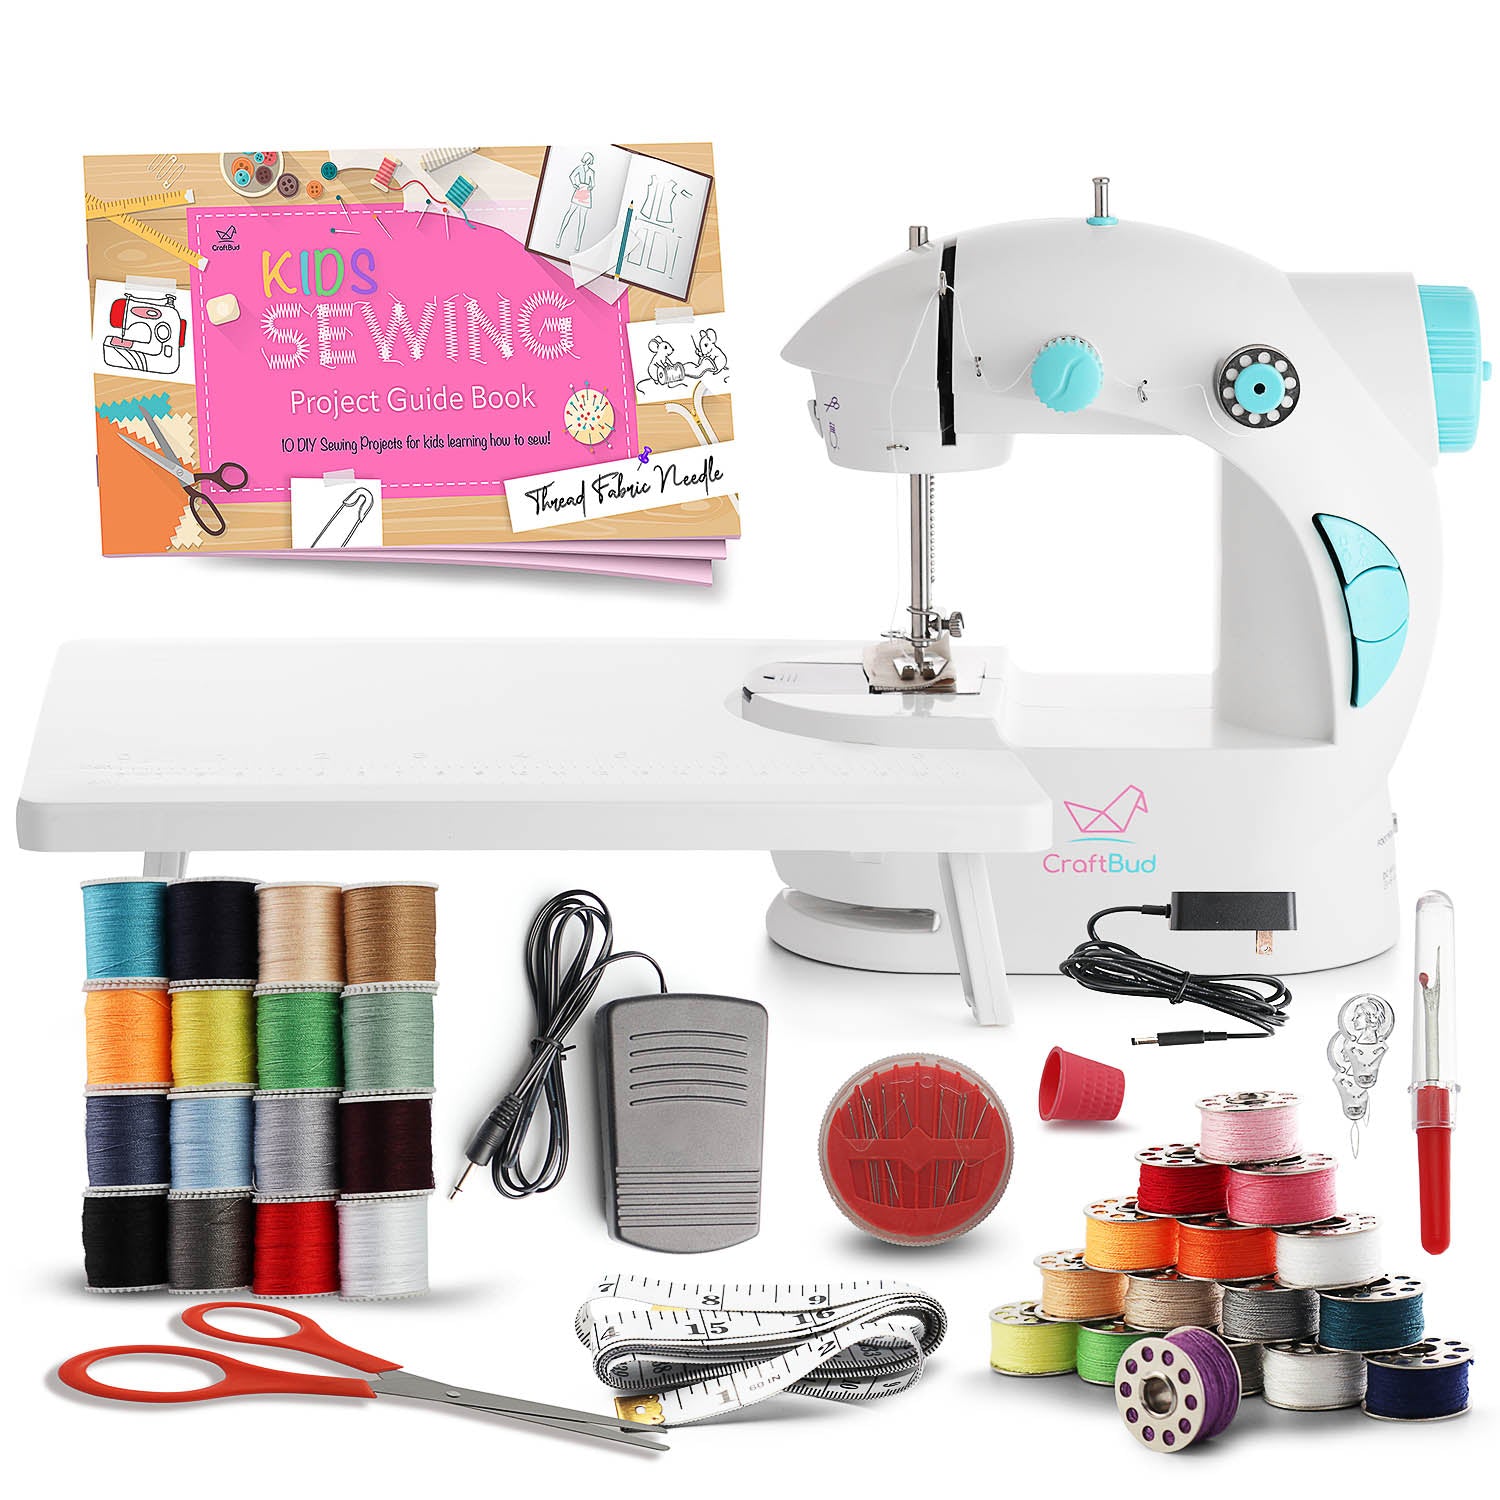 DARTWOOD 251021 Mini Sewing Machine for Beginners and Kids User Manual